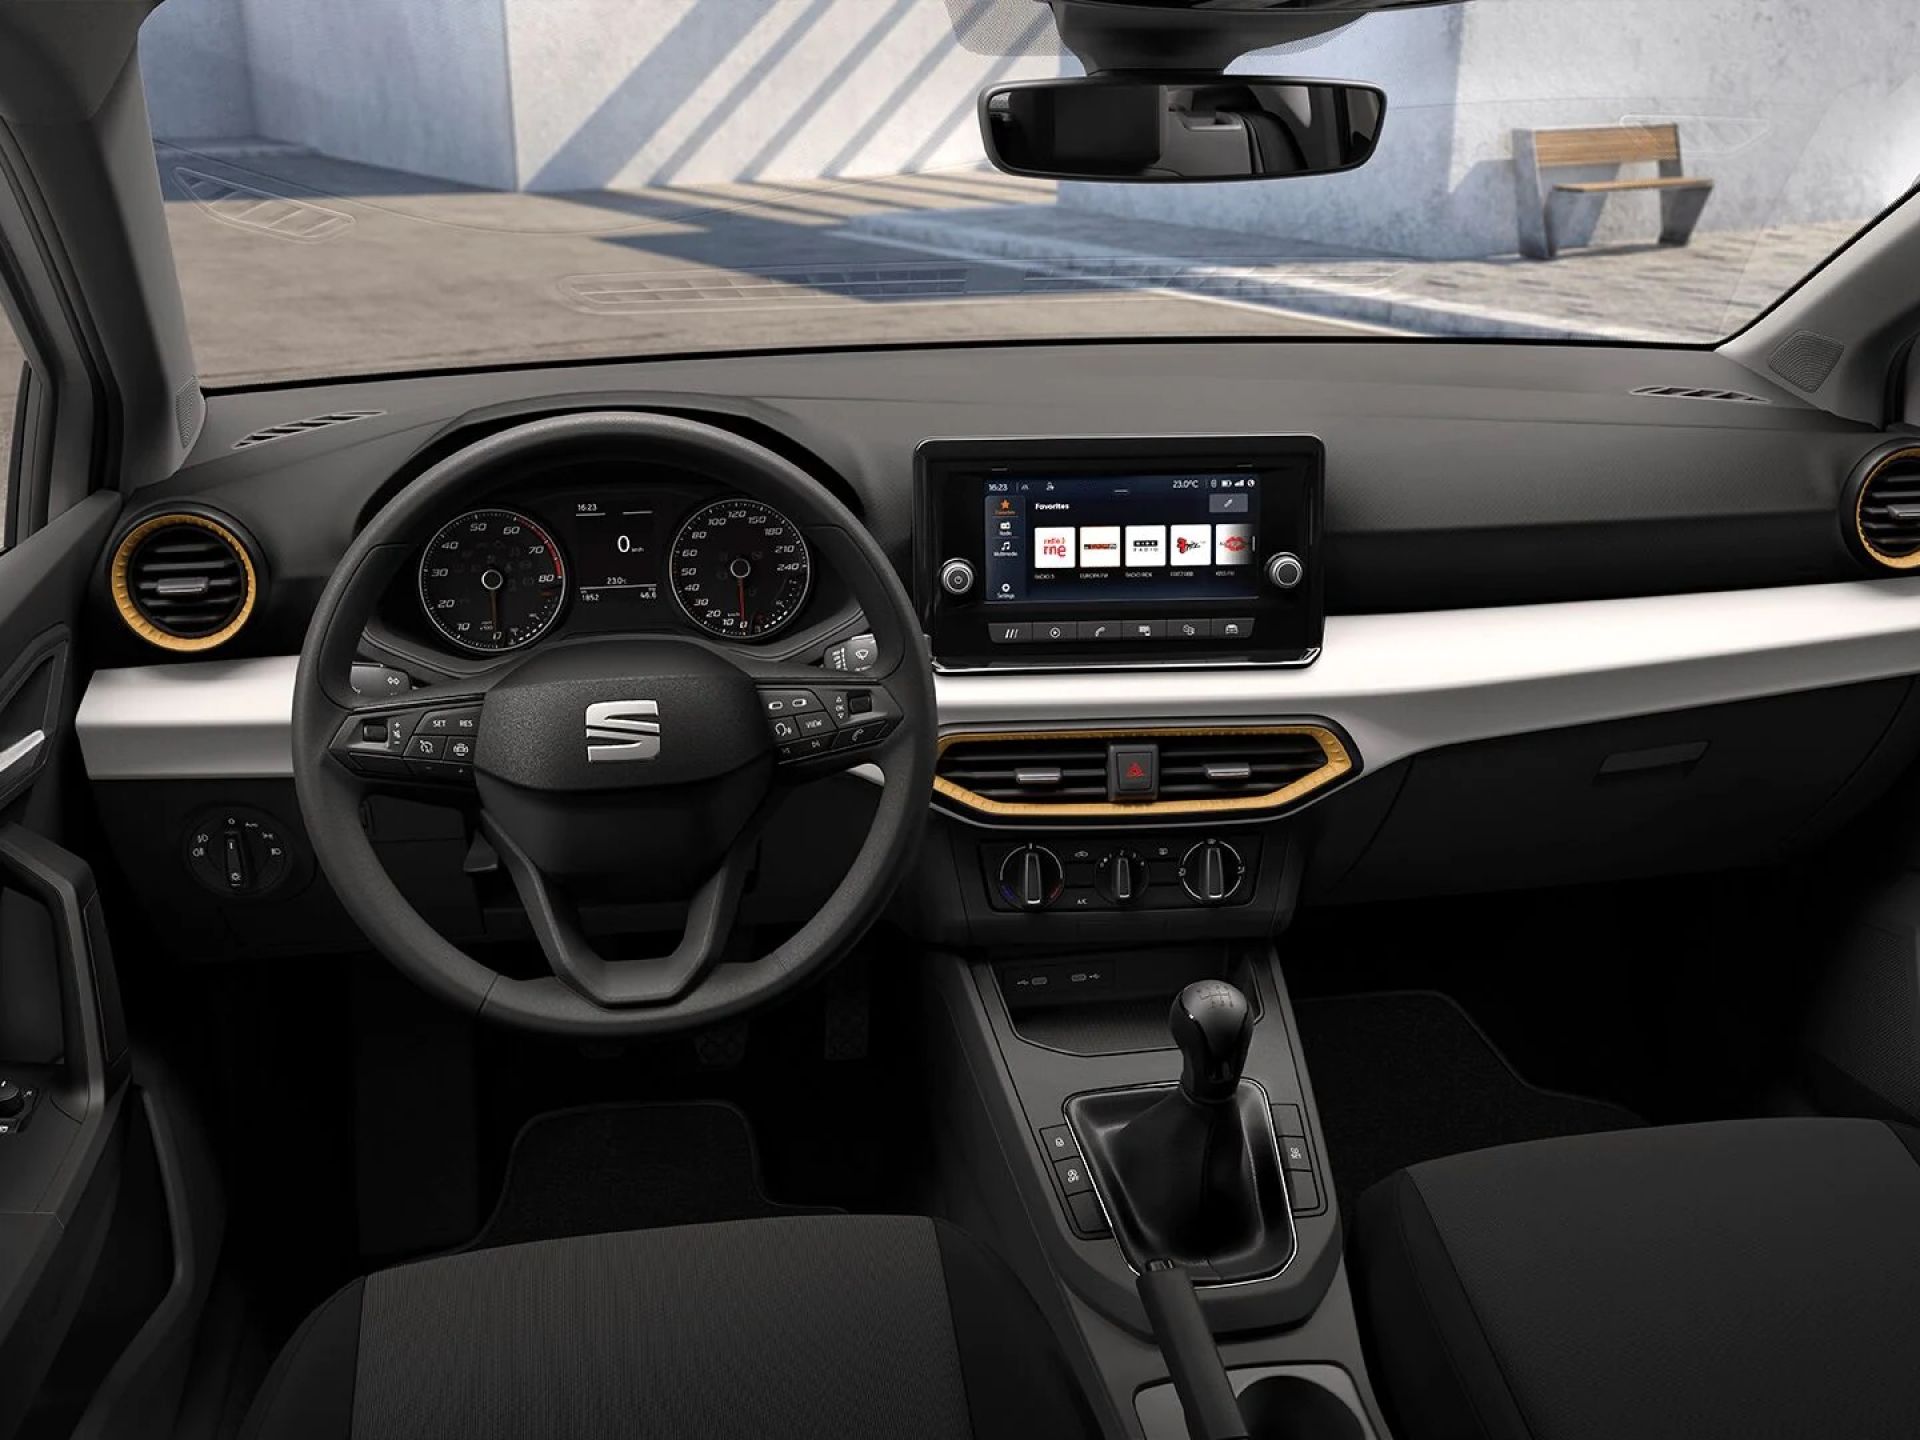 SEAT Ibiza 1.0 MPI 59kW (80CV) Reference